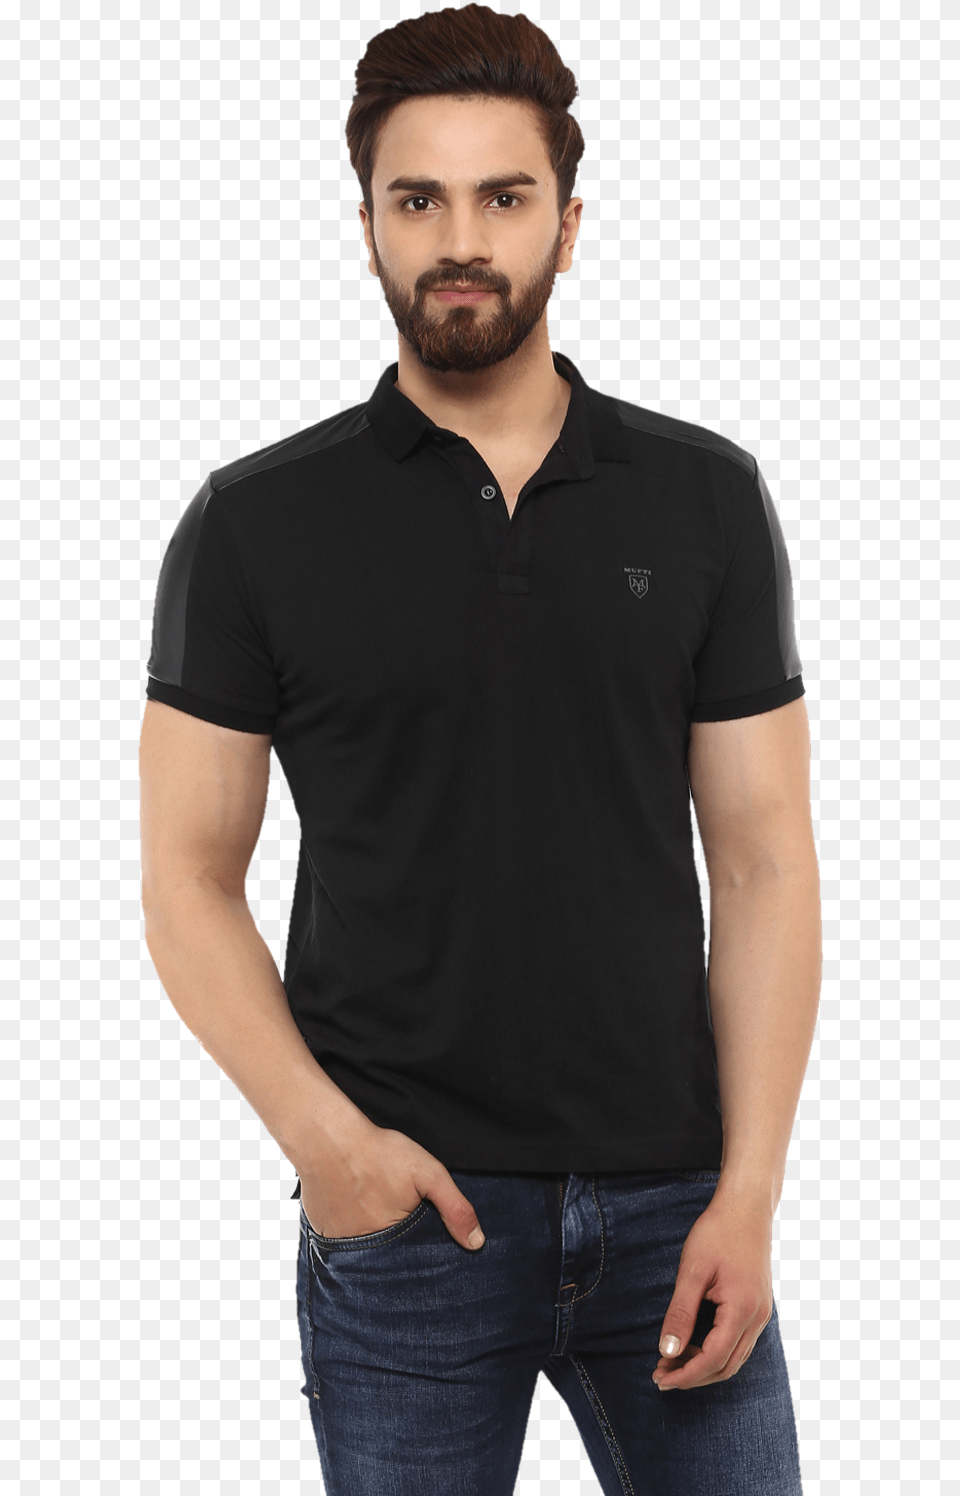 Buy Polo Plain Black Half Sleeves Shirt Online Mens, T-shirt, Clothing, Face, Head Png Image